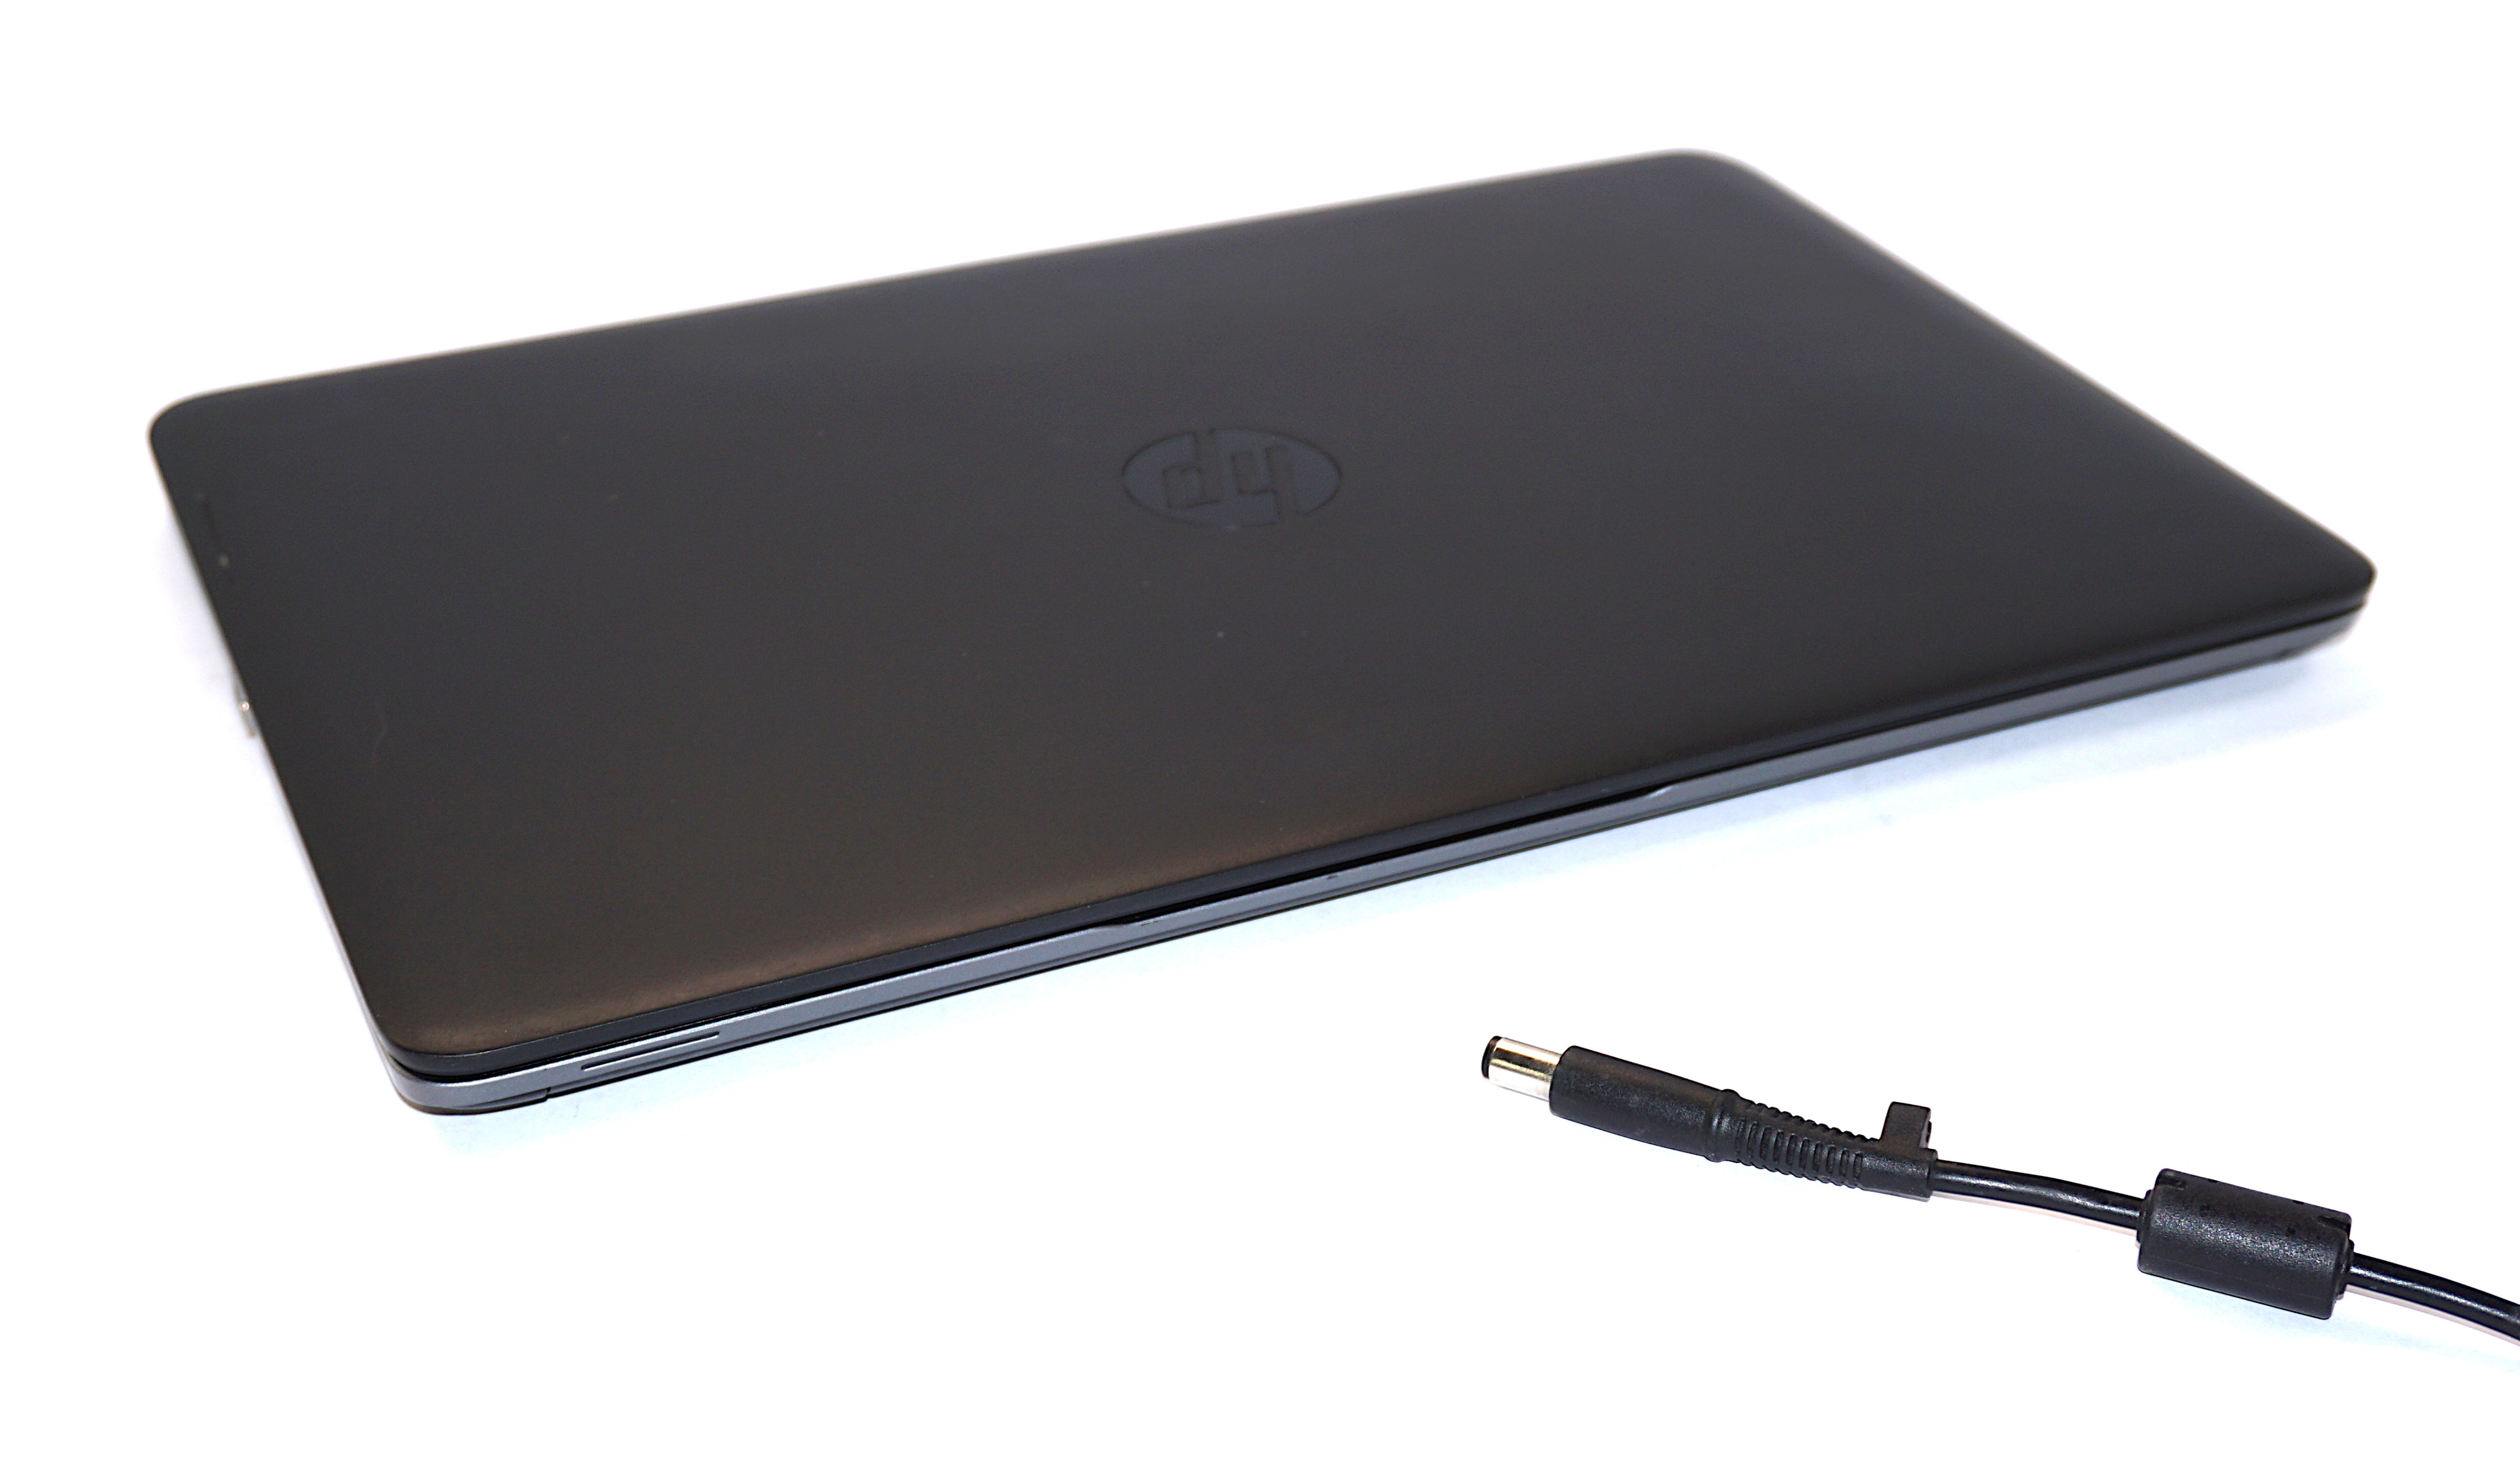 HP EliteBook 850 G1 Laptop, 15.5" i7 4th Gen, 8GB RAM, 256GB SSD